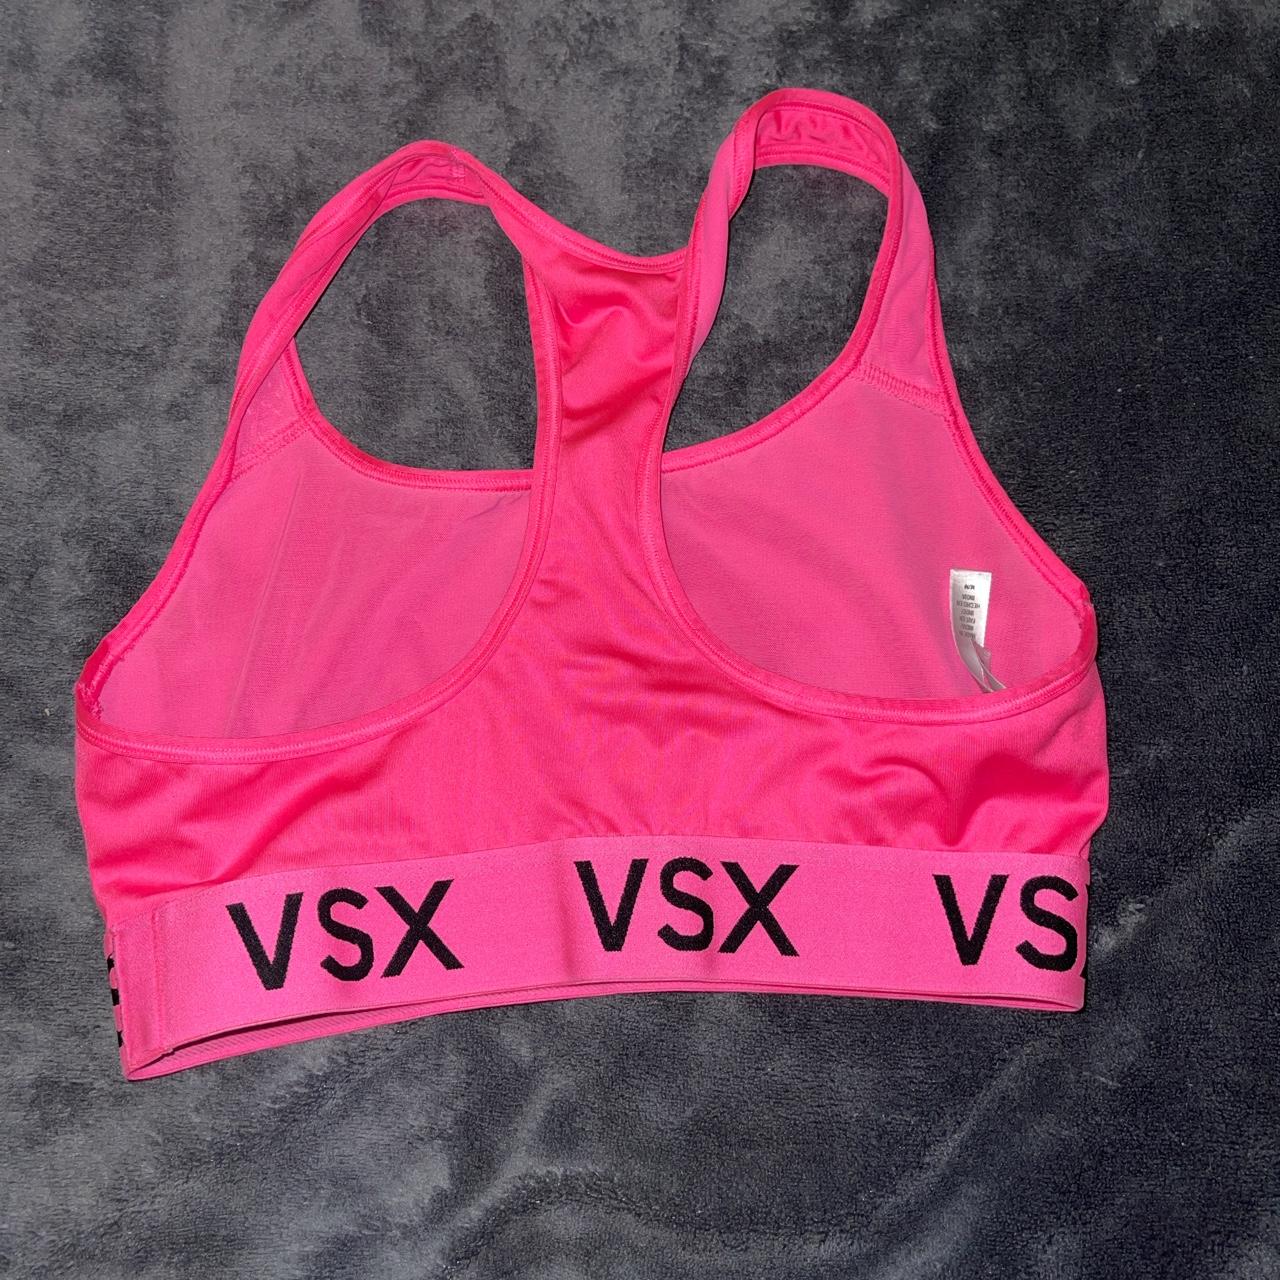 victoria's secret pink black and white padded sports - Depop